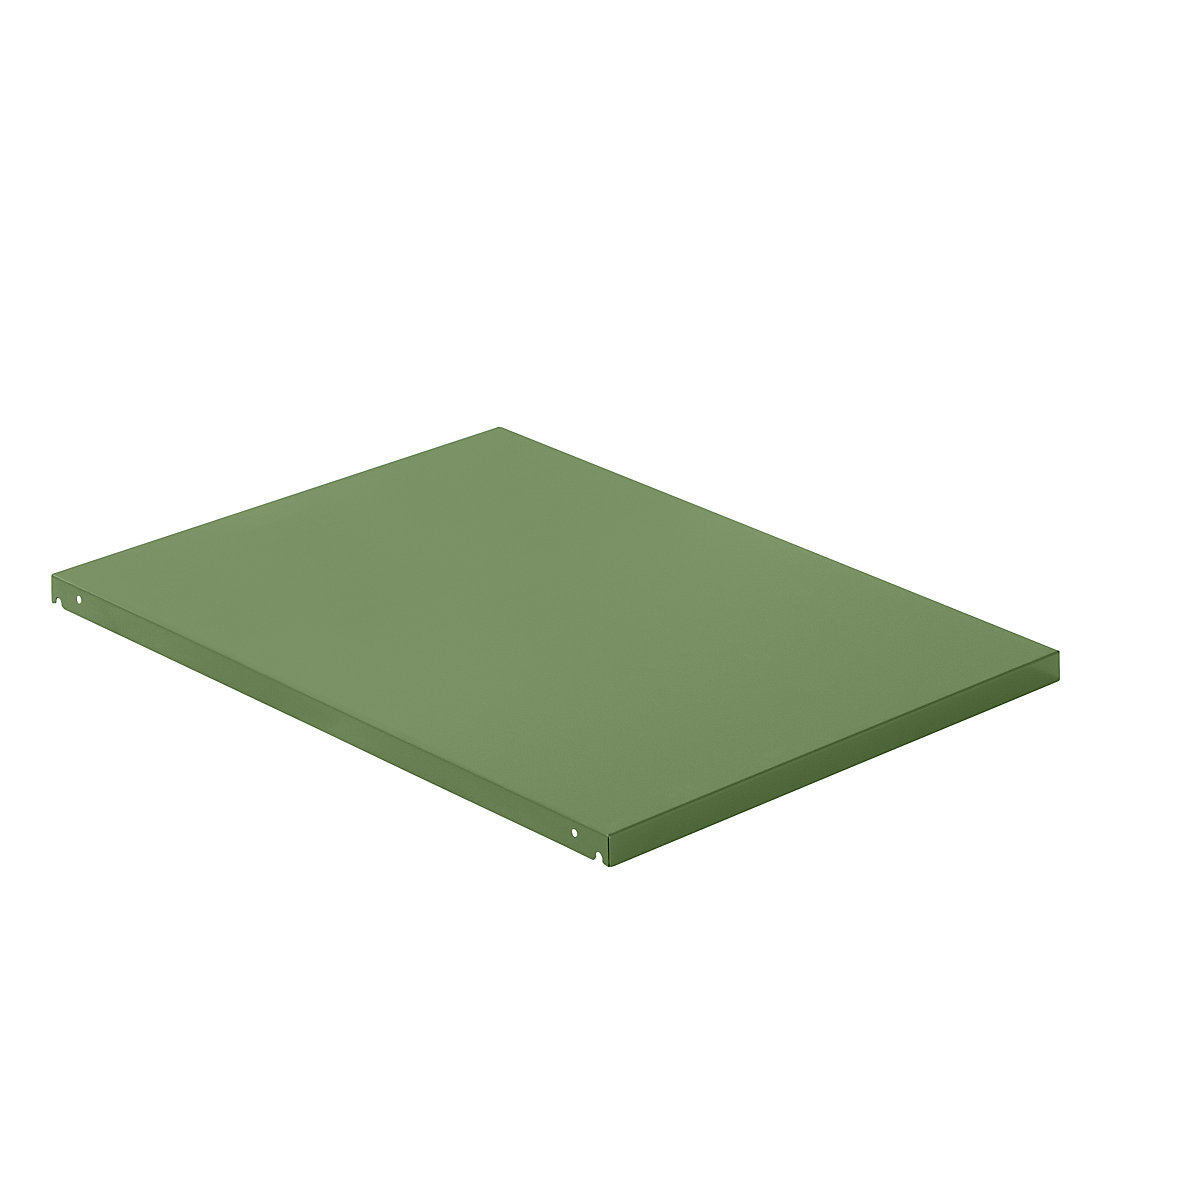 Sheet steel top shelf – LISTA, WxD 890 x 1260 mm, max. shelf load 100 kg, reseda green